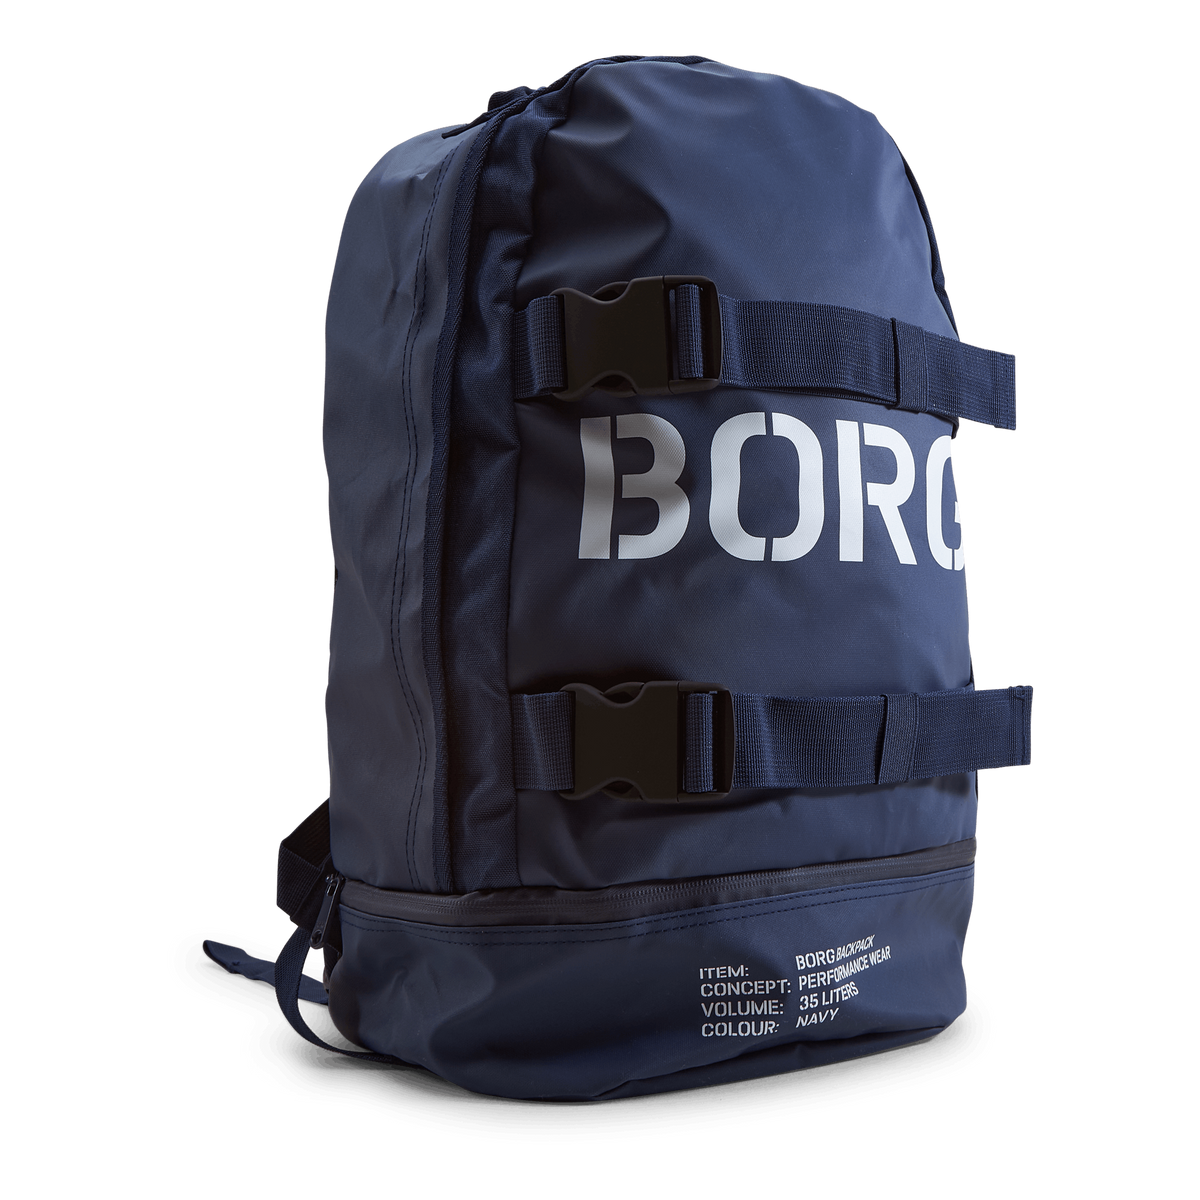 Borg Duffle Backpack Depths